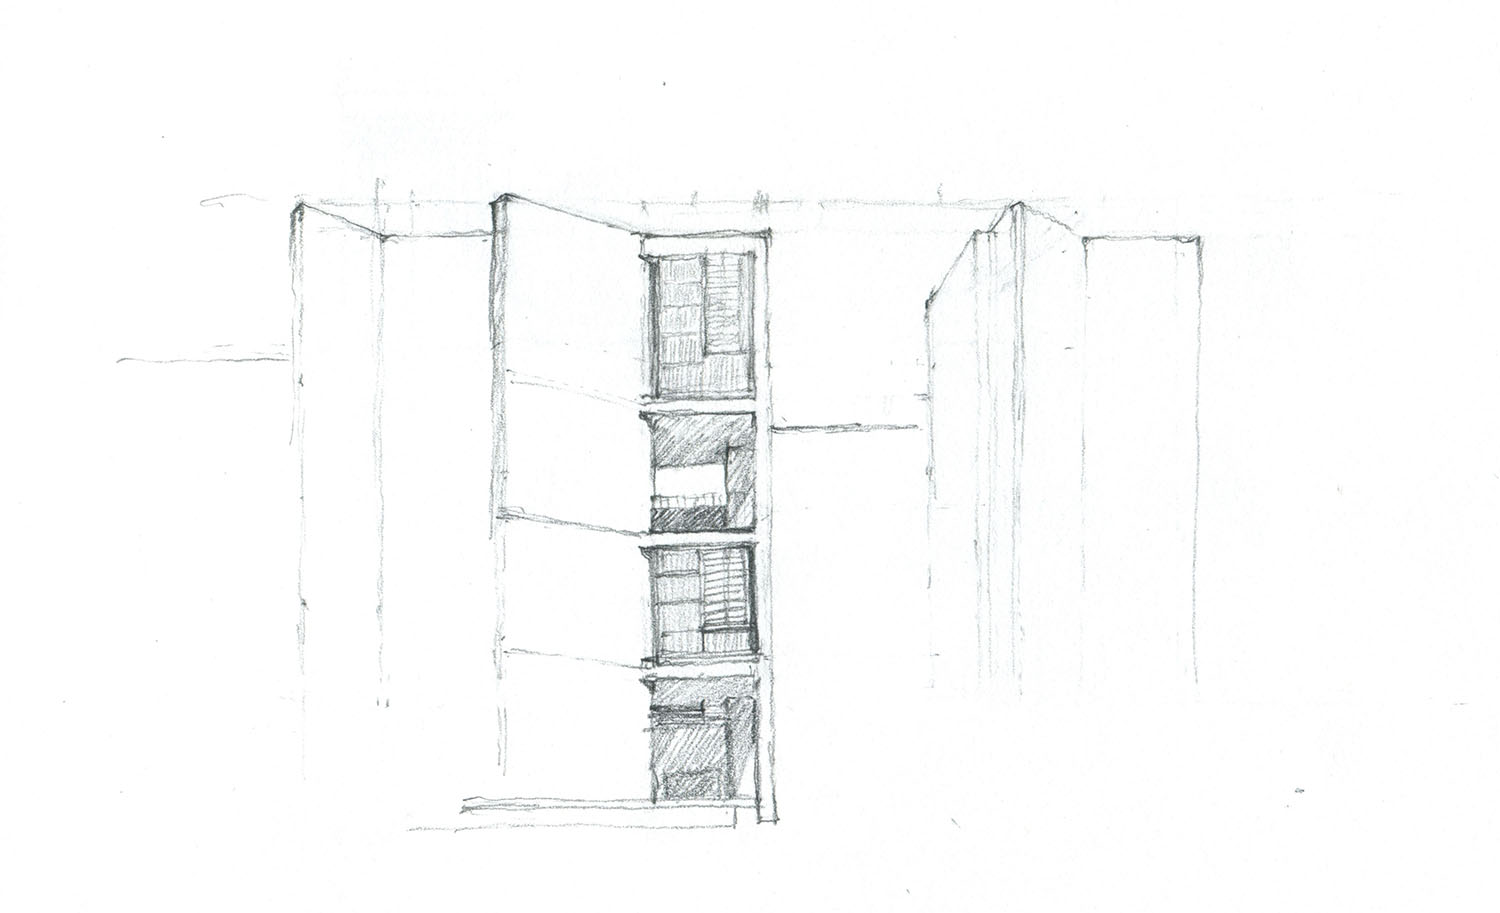 salk institute drawings